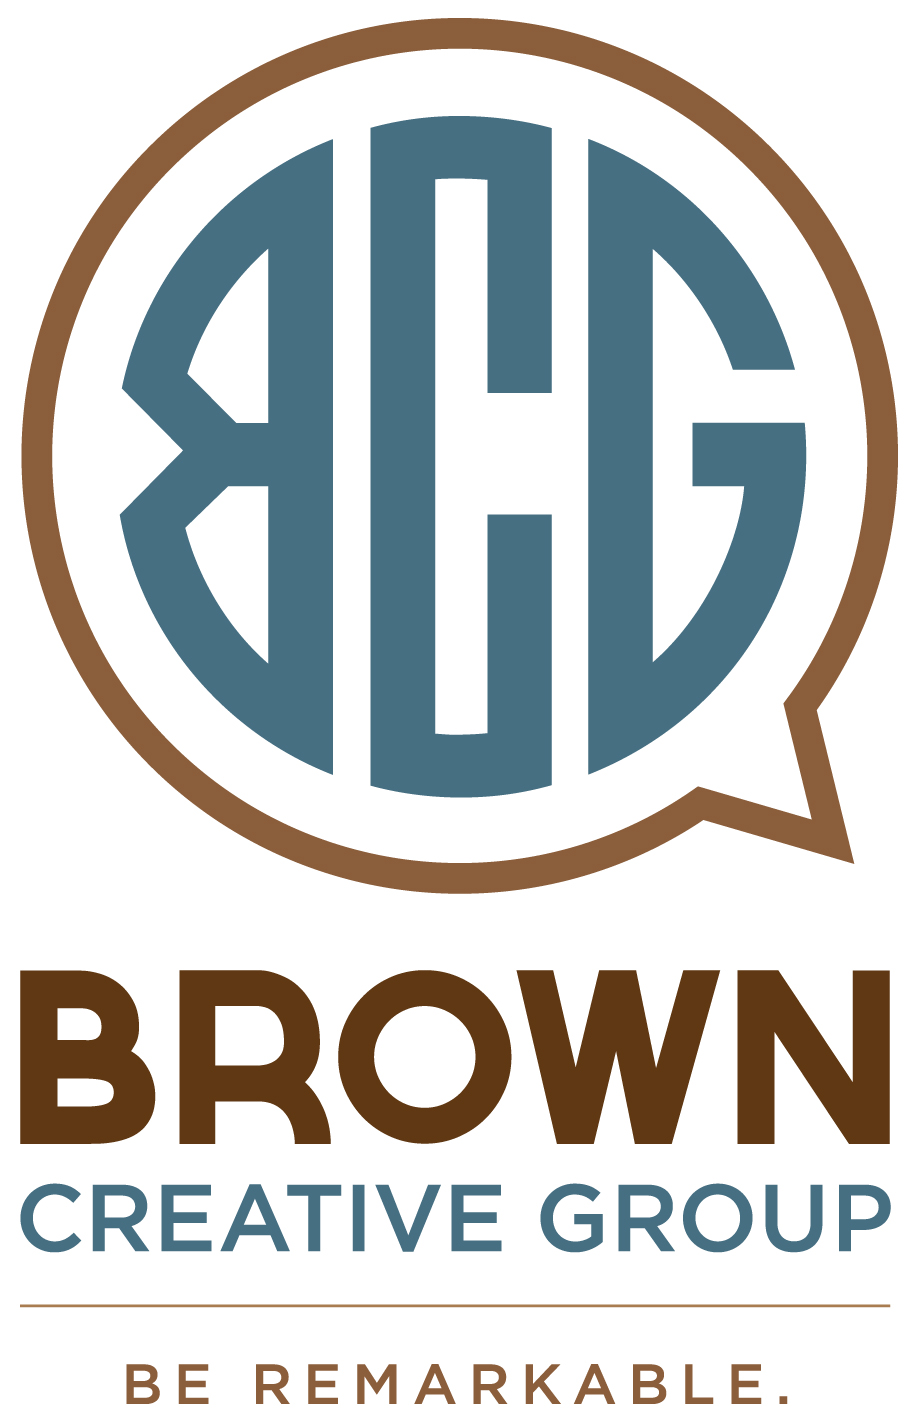 Brown Creative Group's new branding.